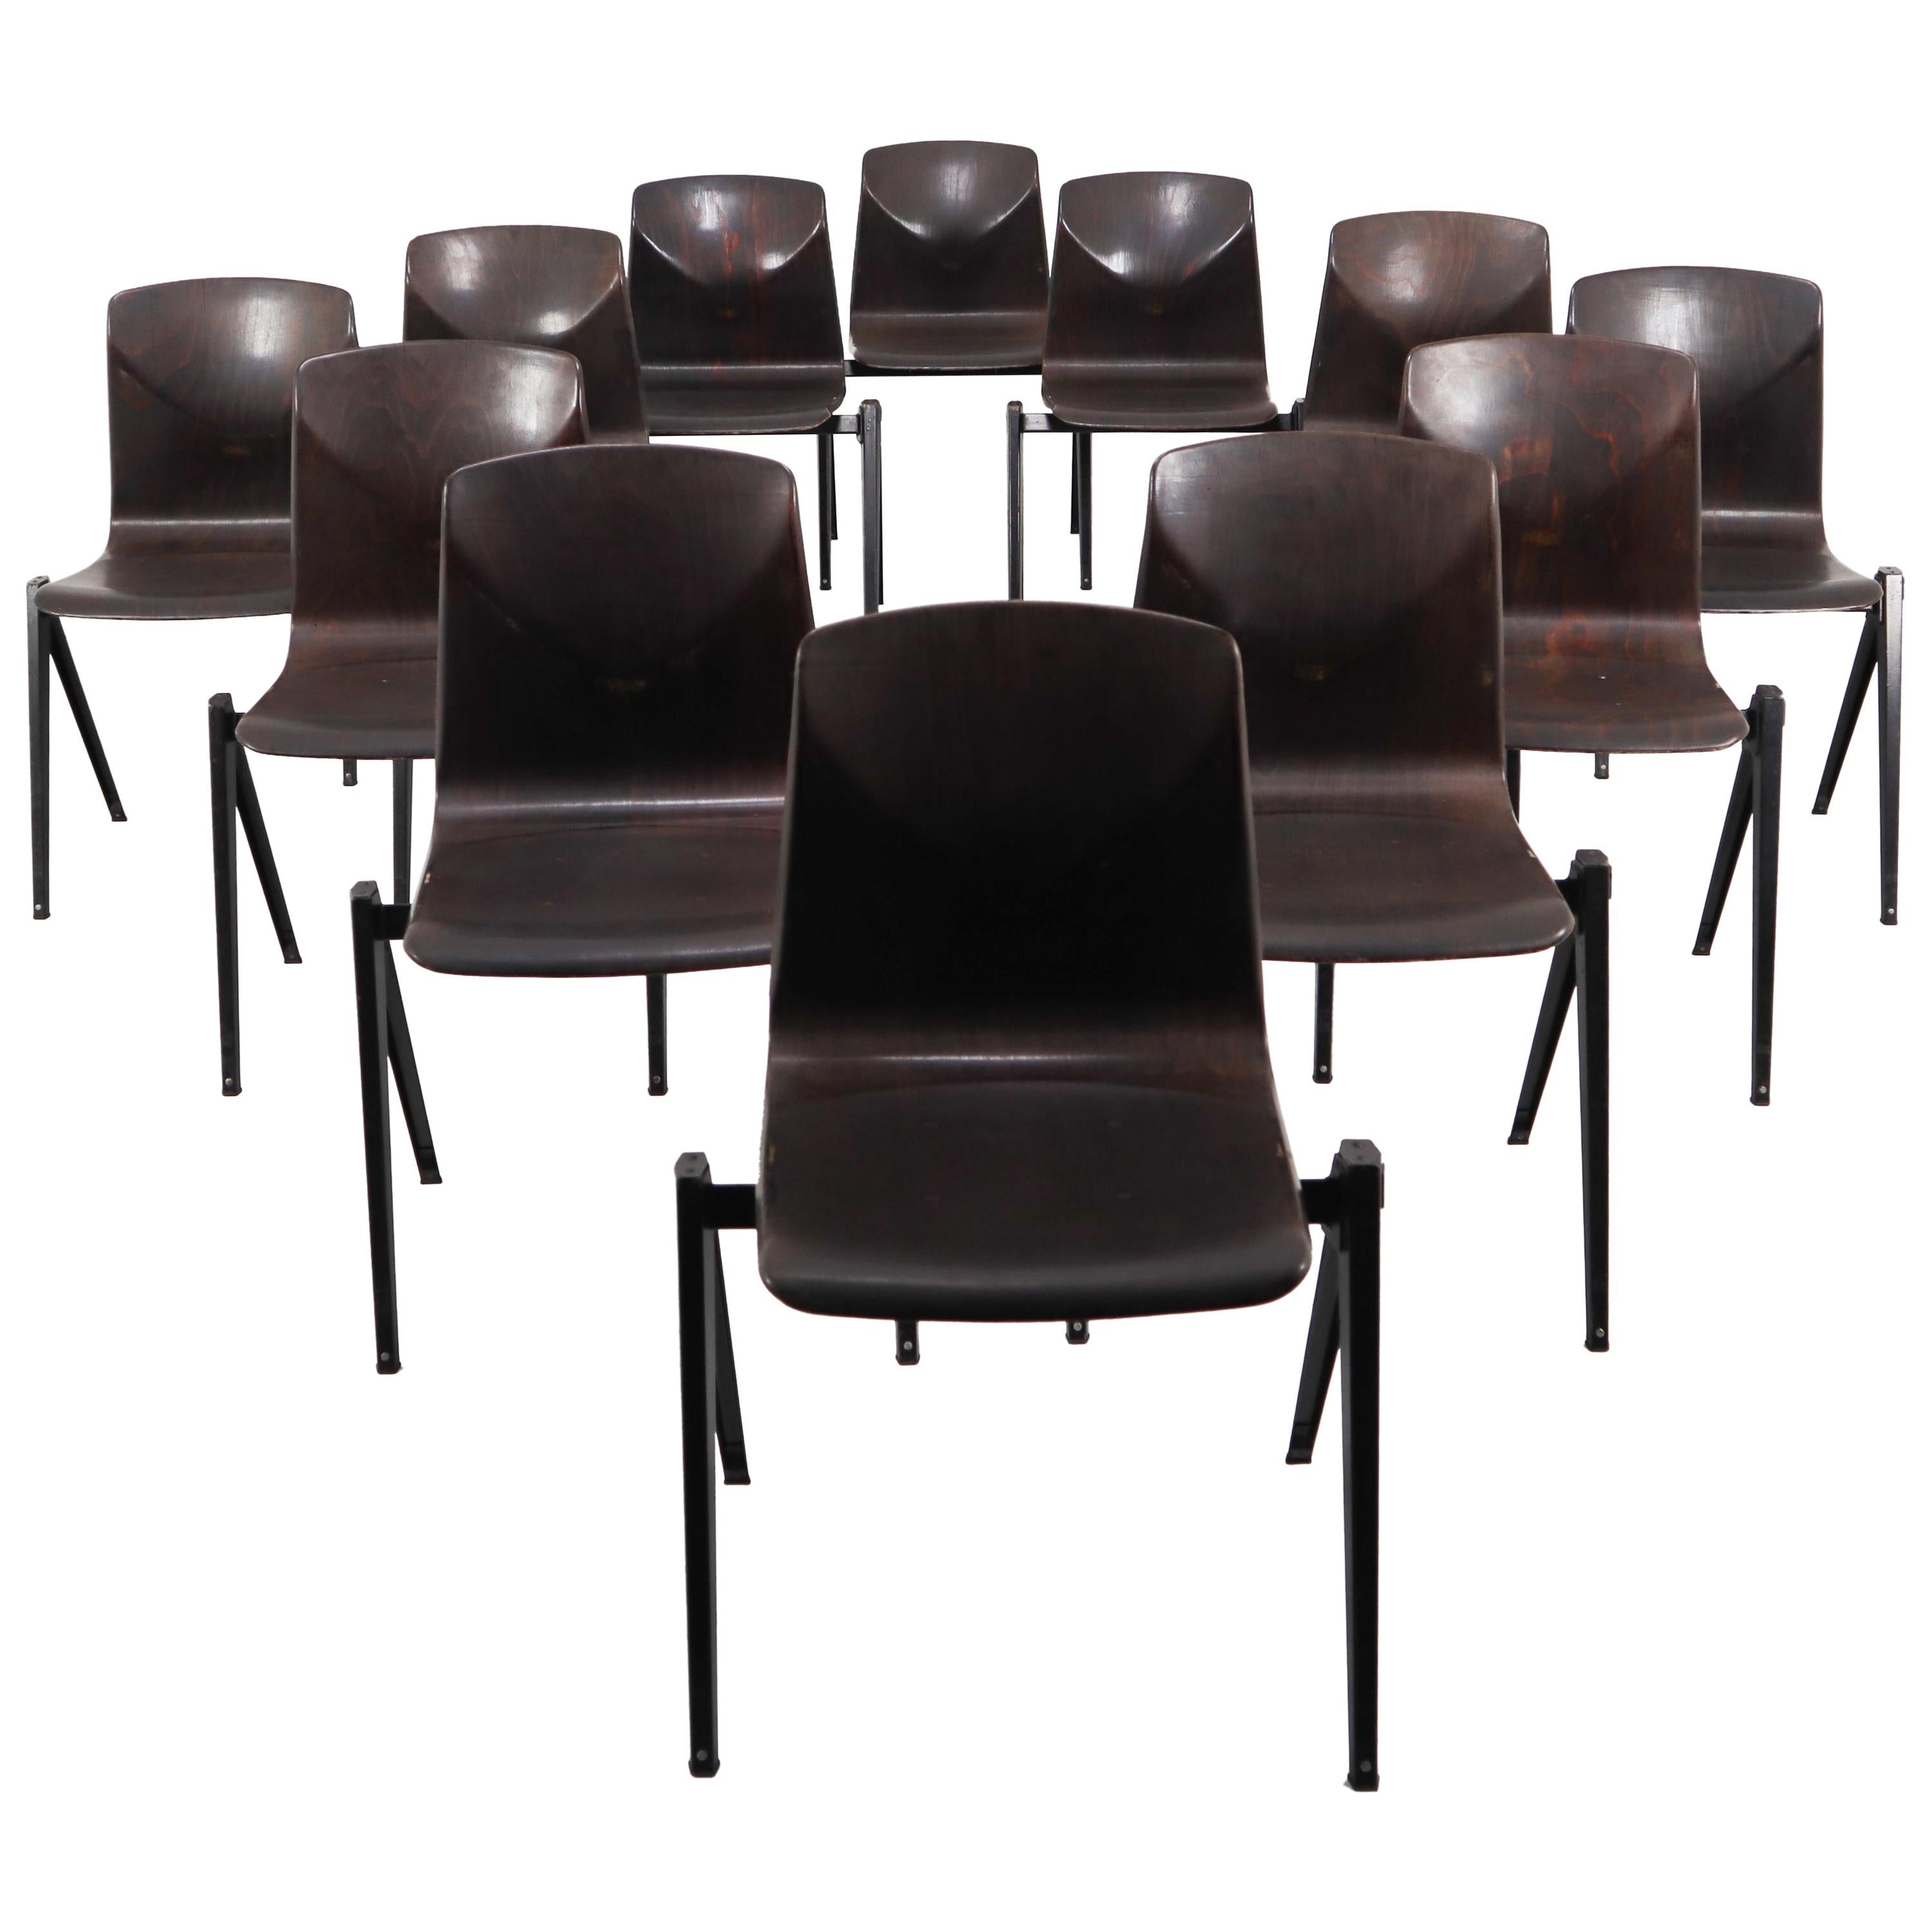 Set of 30 Vintage industrial Galvanitas S22 plywood chairs , Dutch Design 1960s